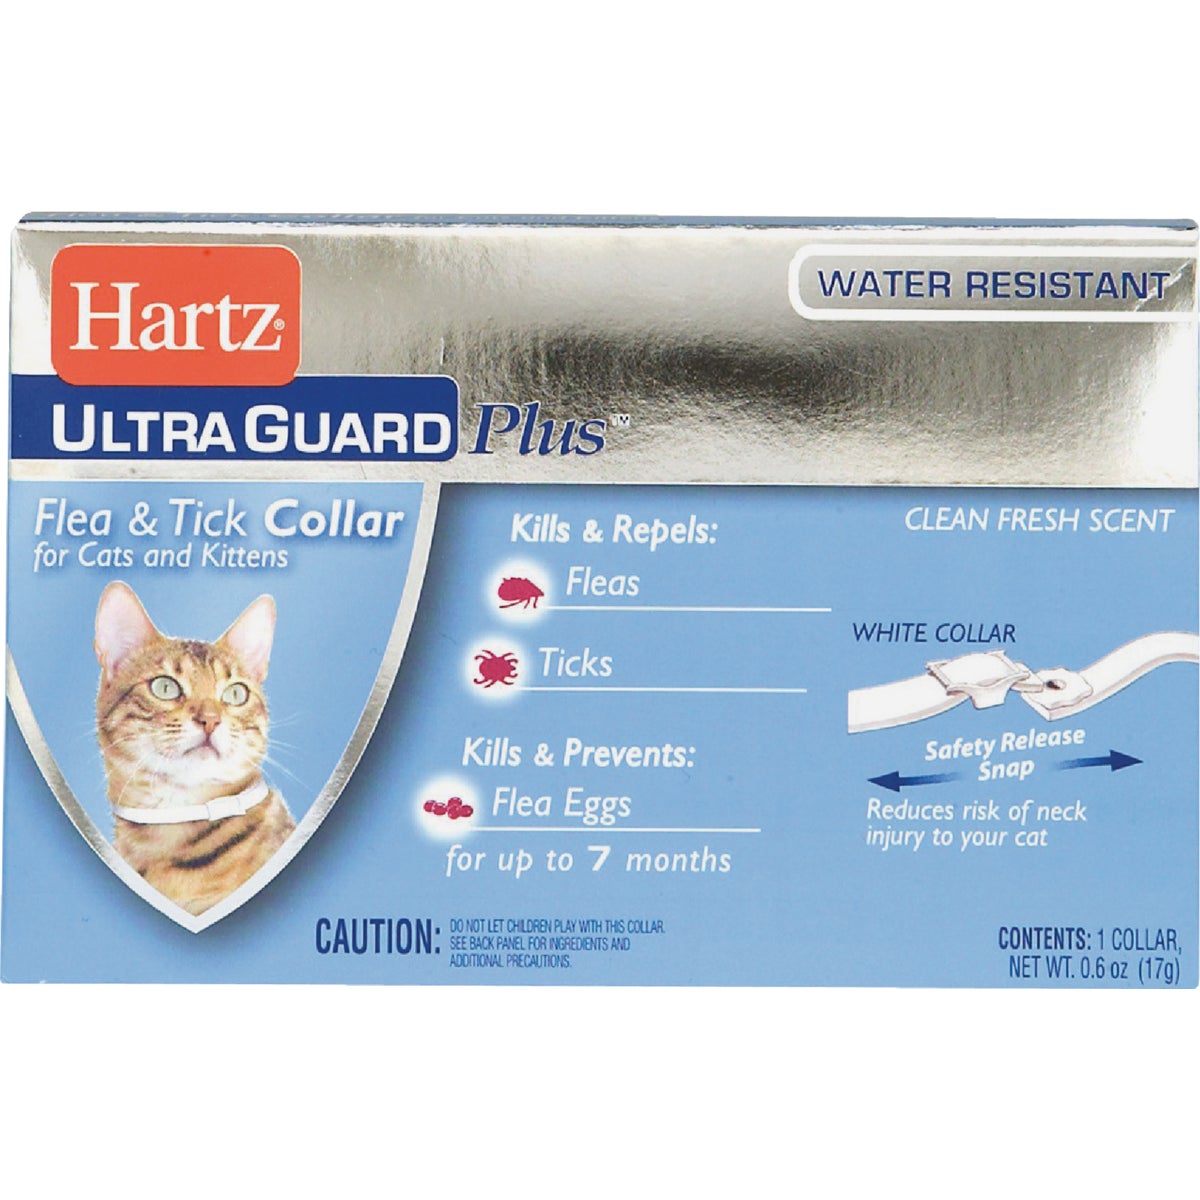 Hartz Ultra Guard Plus Water Resistant Flea & Tick Collar For Cats & Kittens